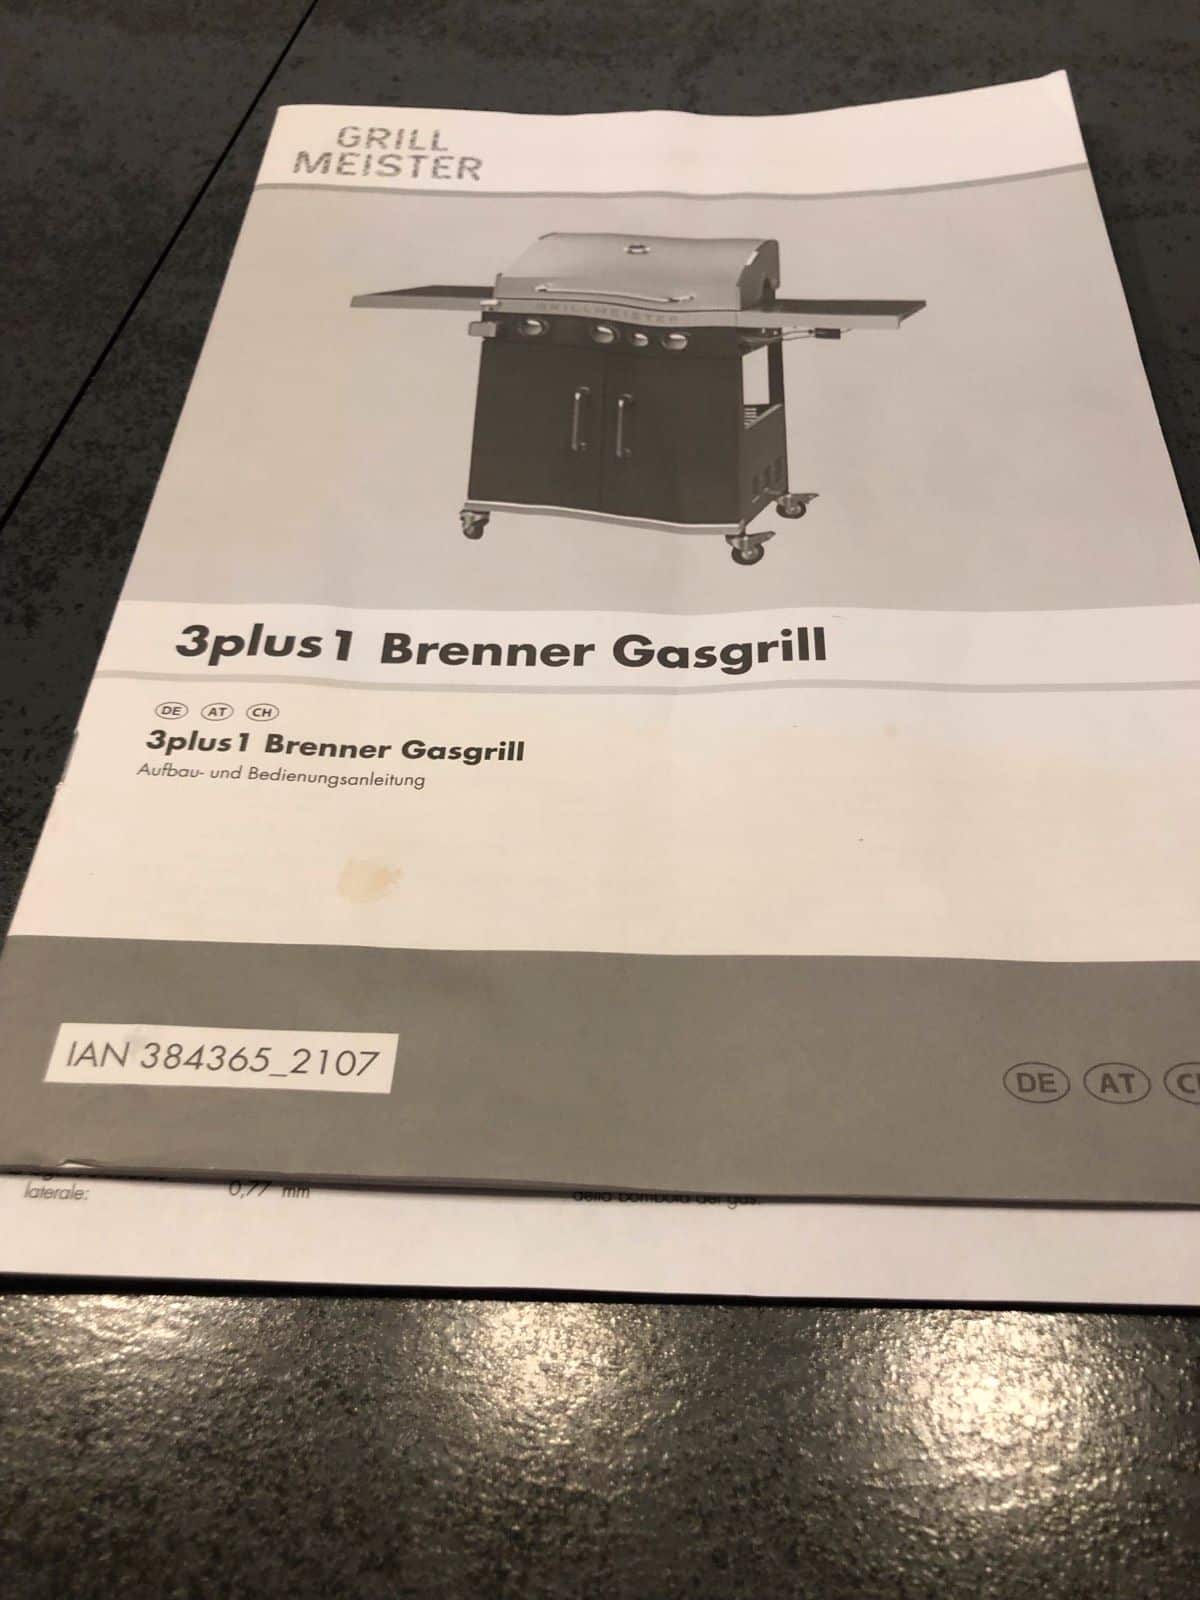 GRILLMEISTER Gasgrill 3plus1 Brenner 14.4 kW Anleitung